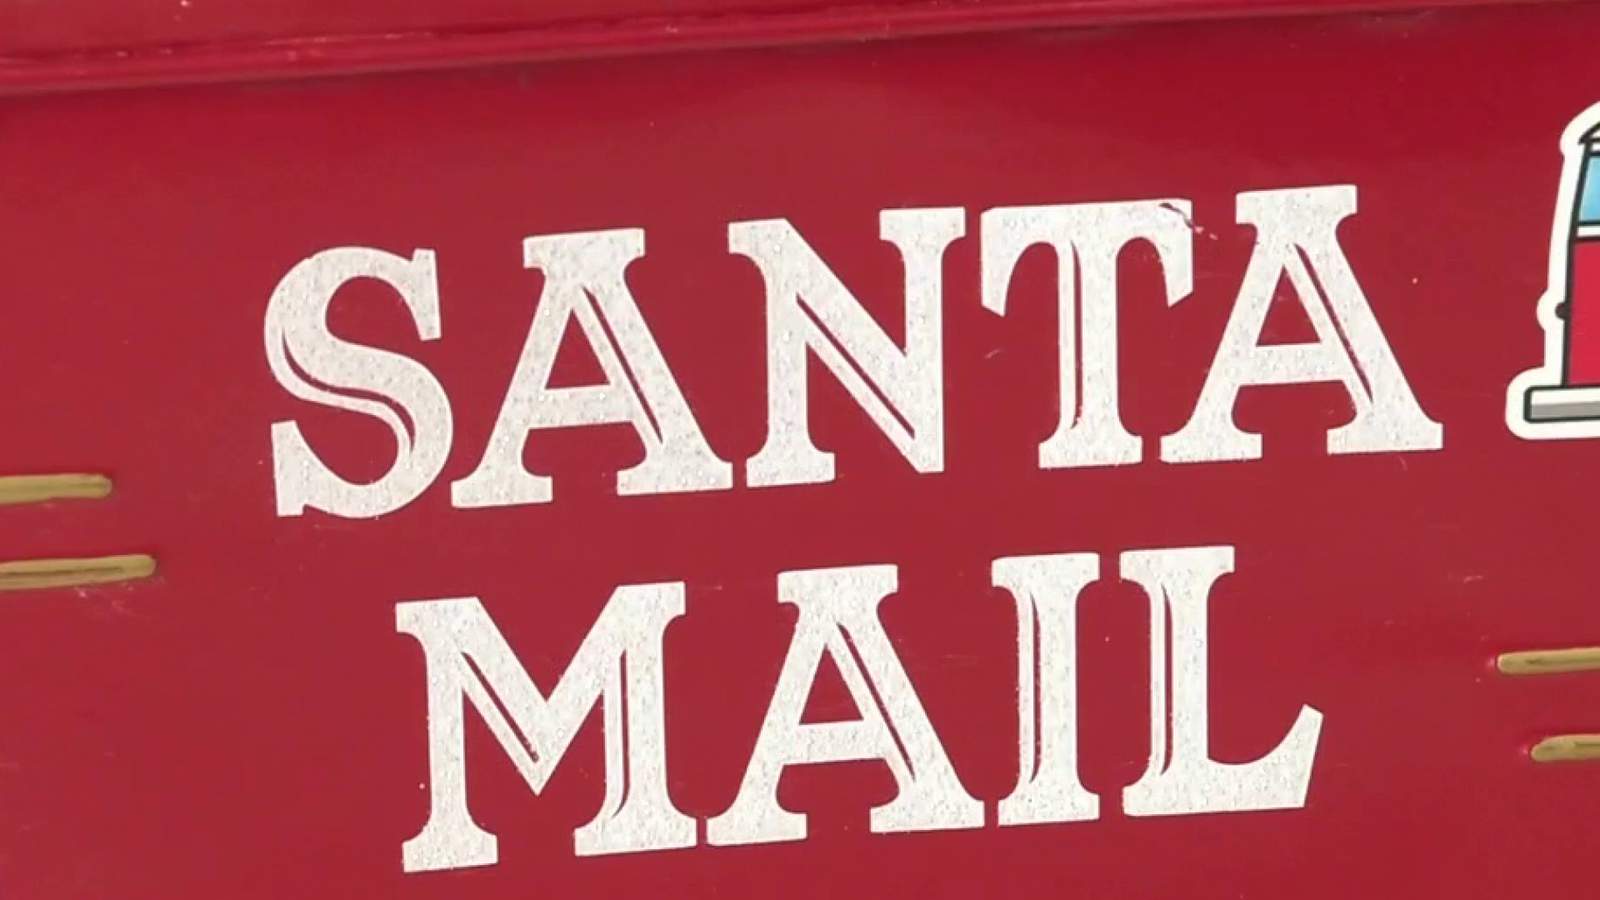 San Antonio restaurant provides holiday mail service for Santa